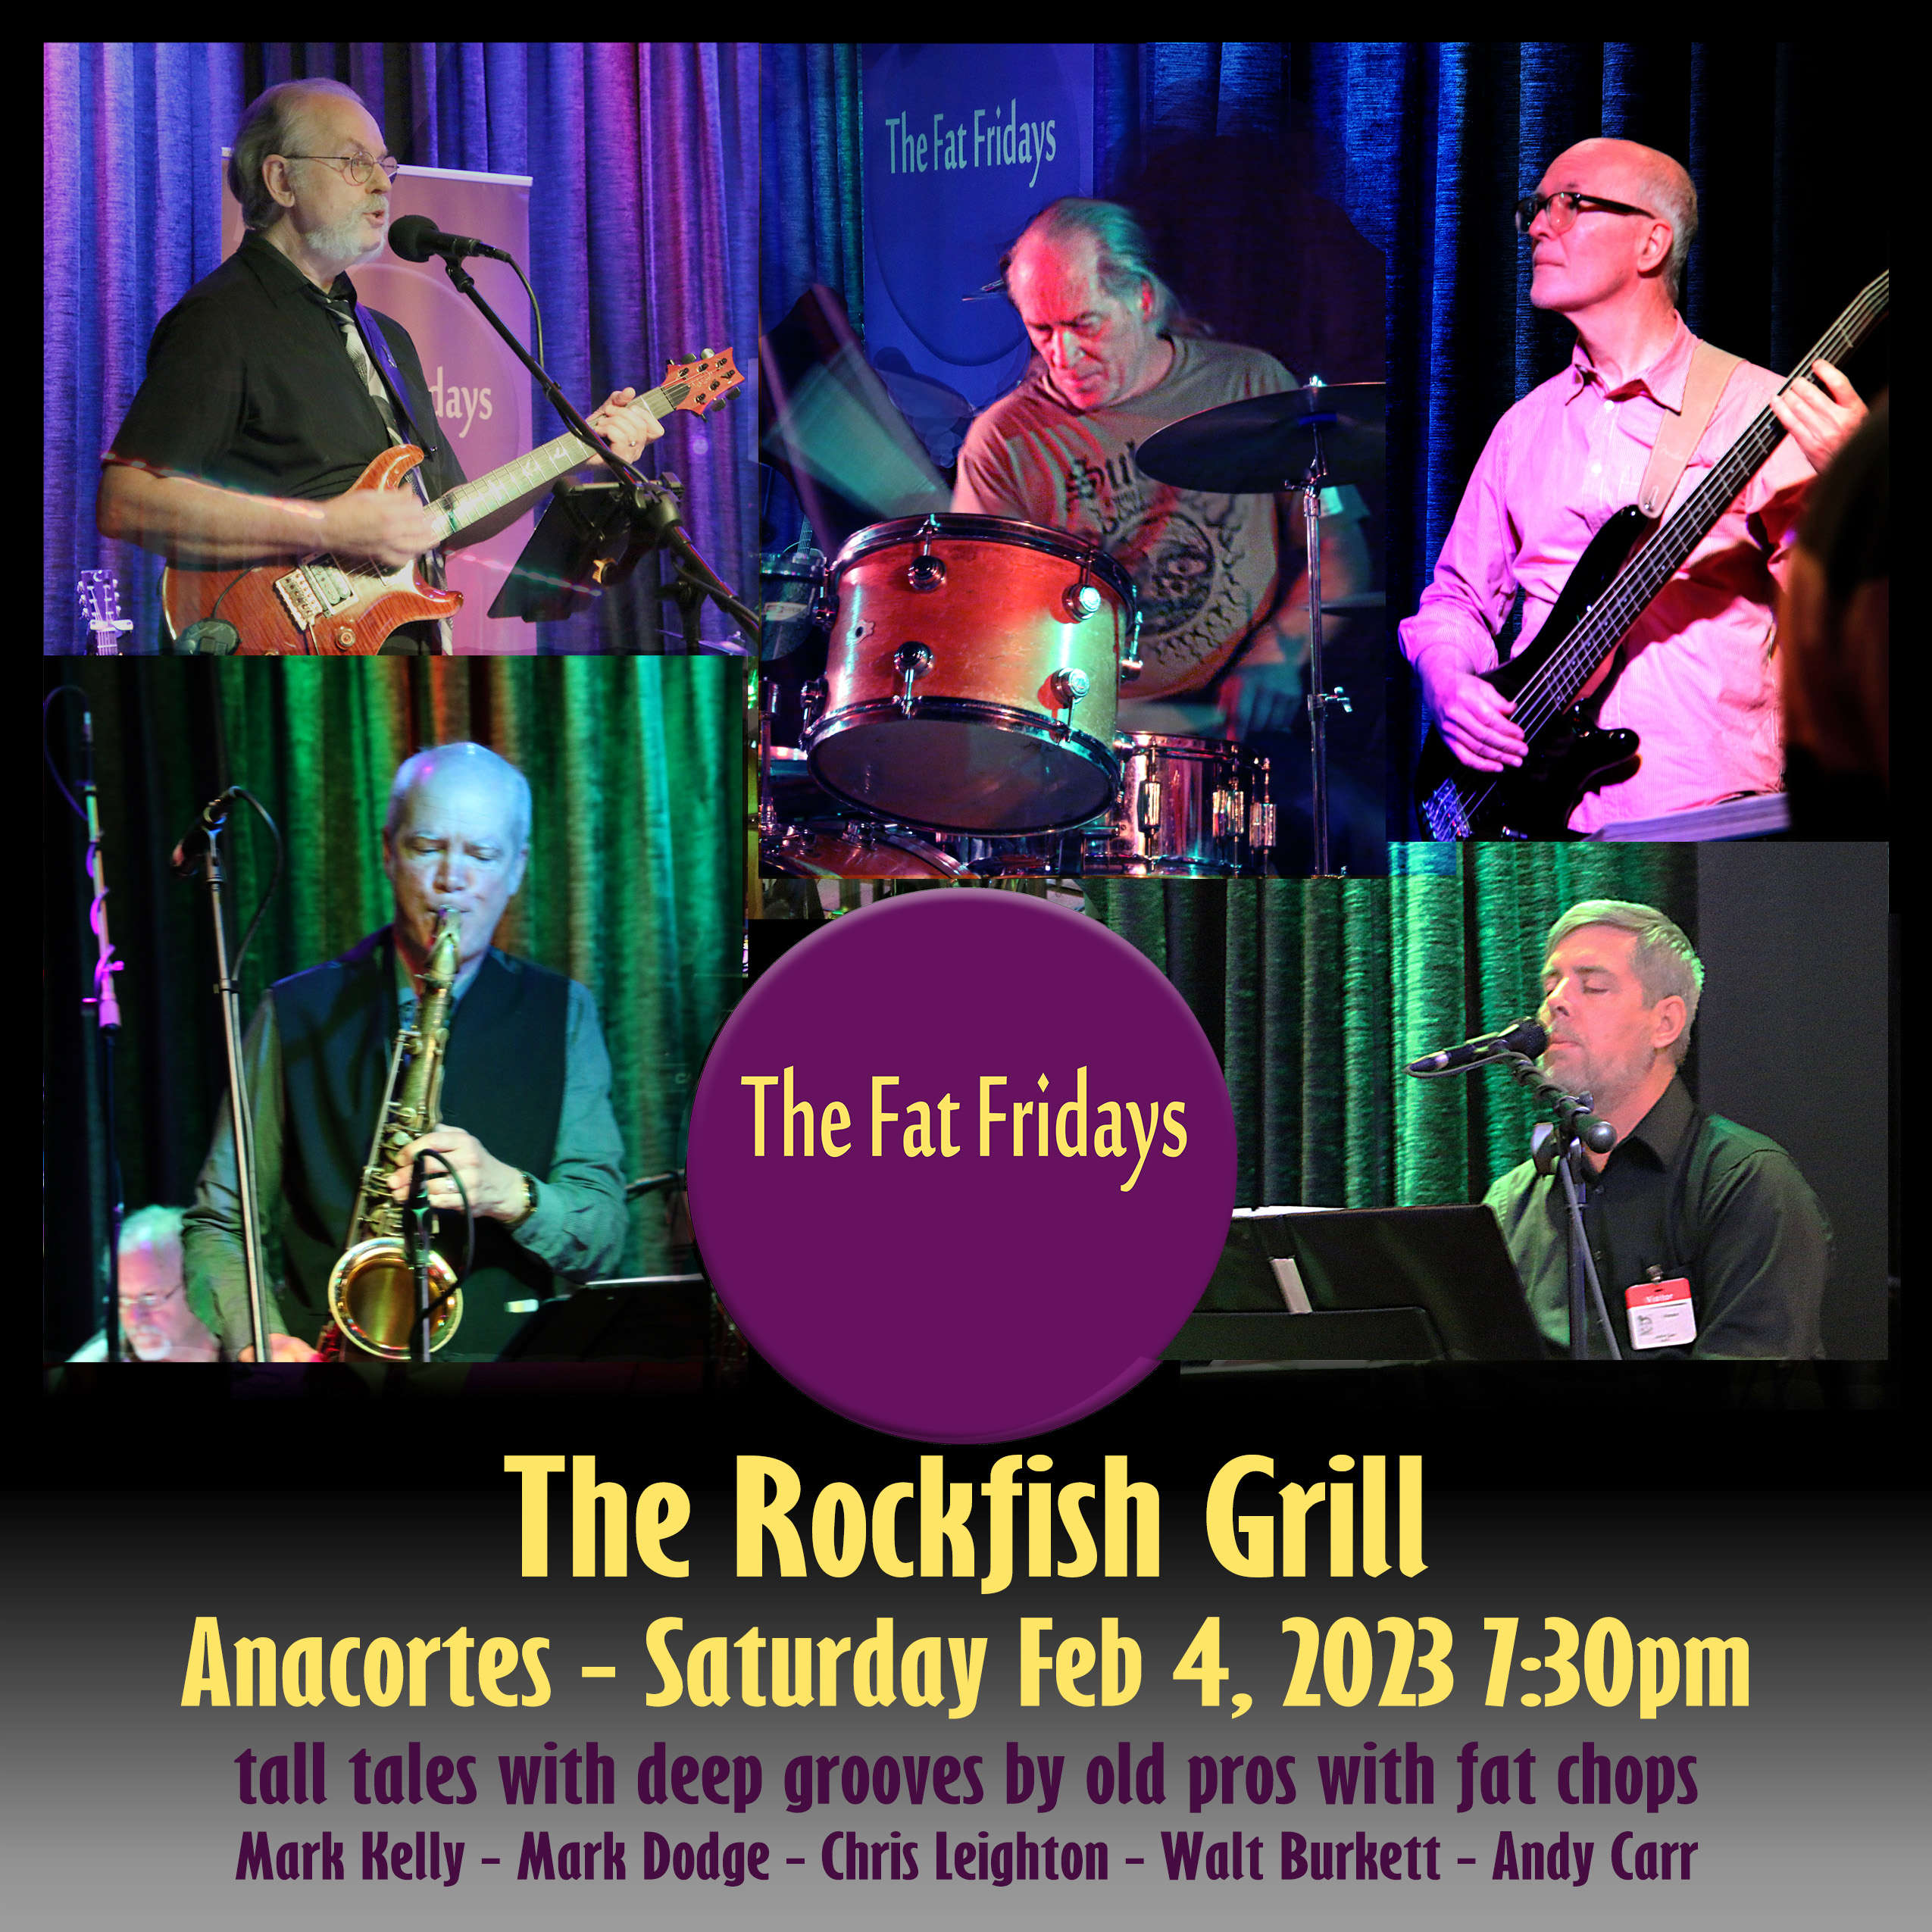 The Fat Fridays live at the Rockfish, Saturday Feb 4, 2023 7:30pm